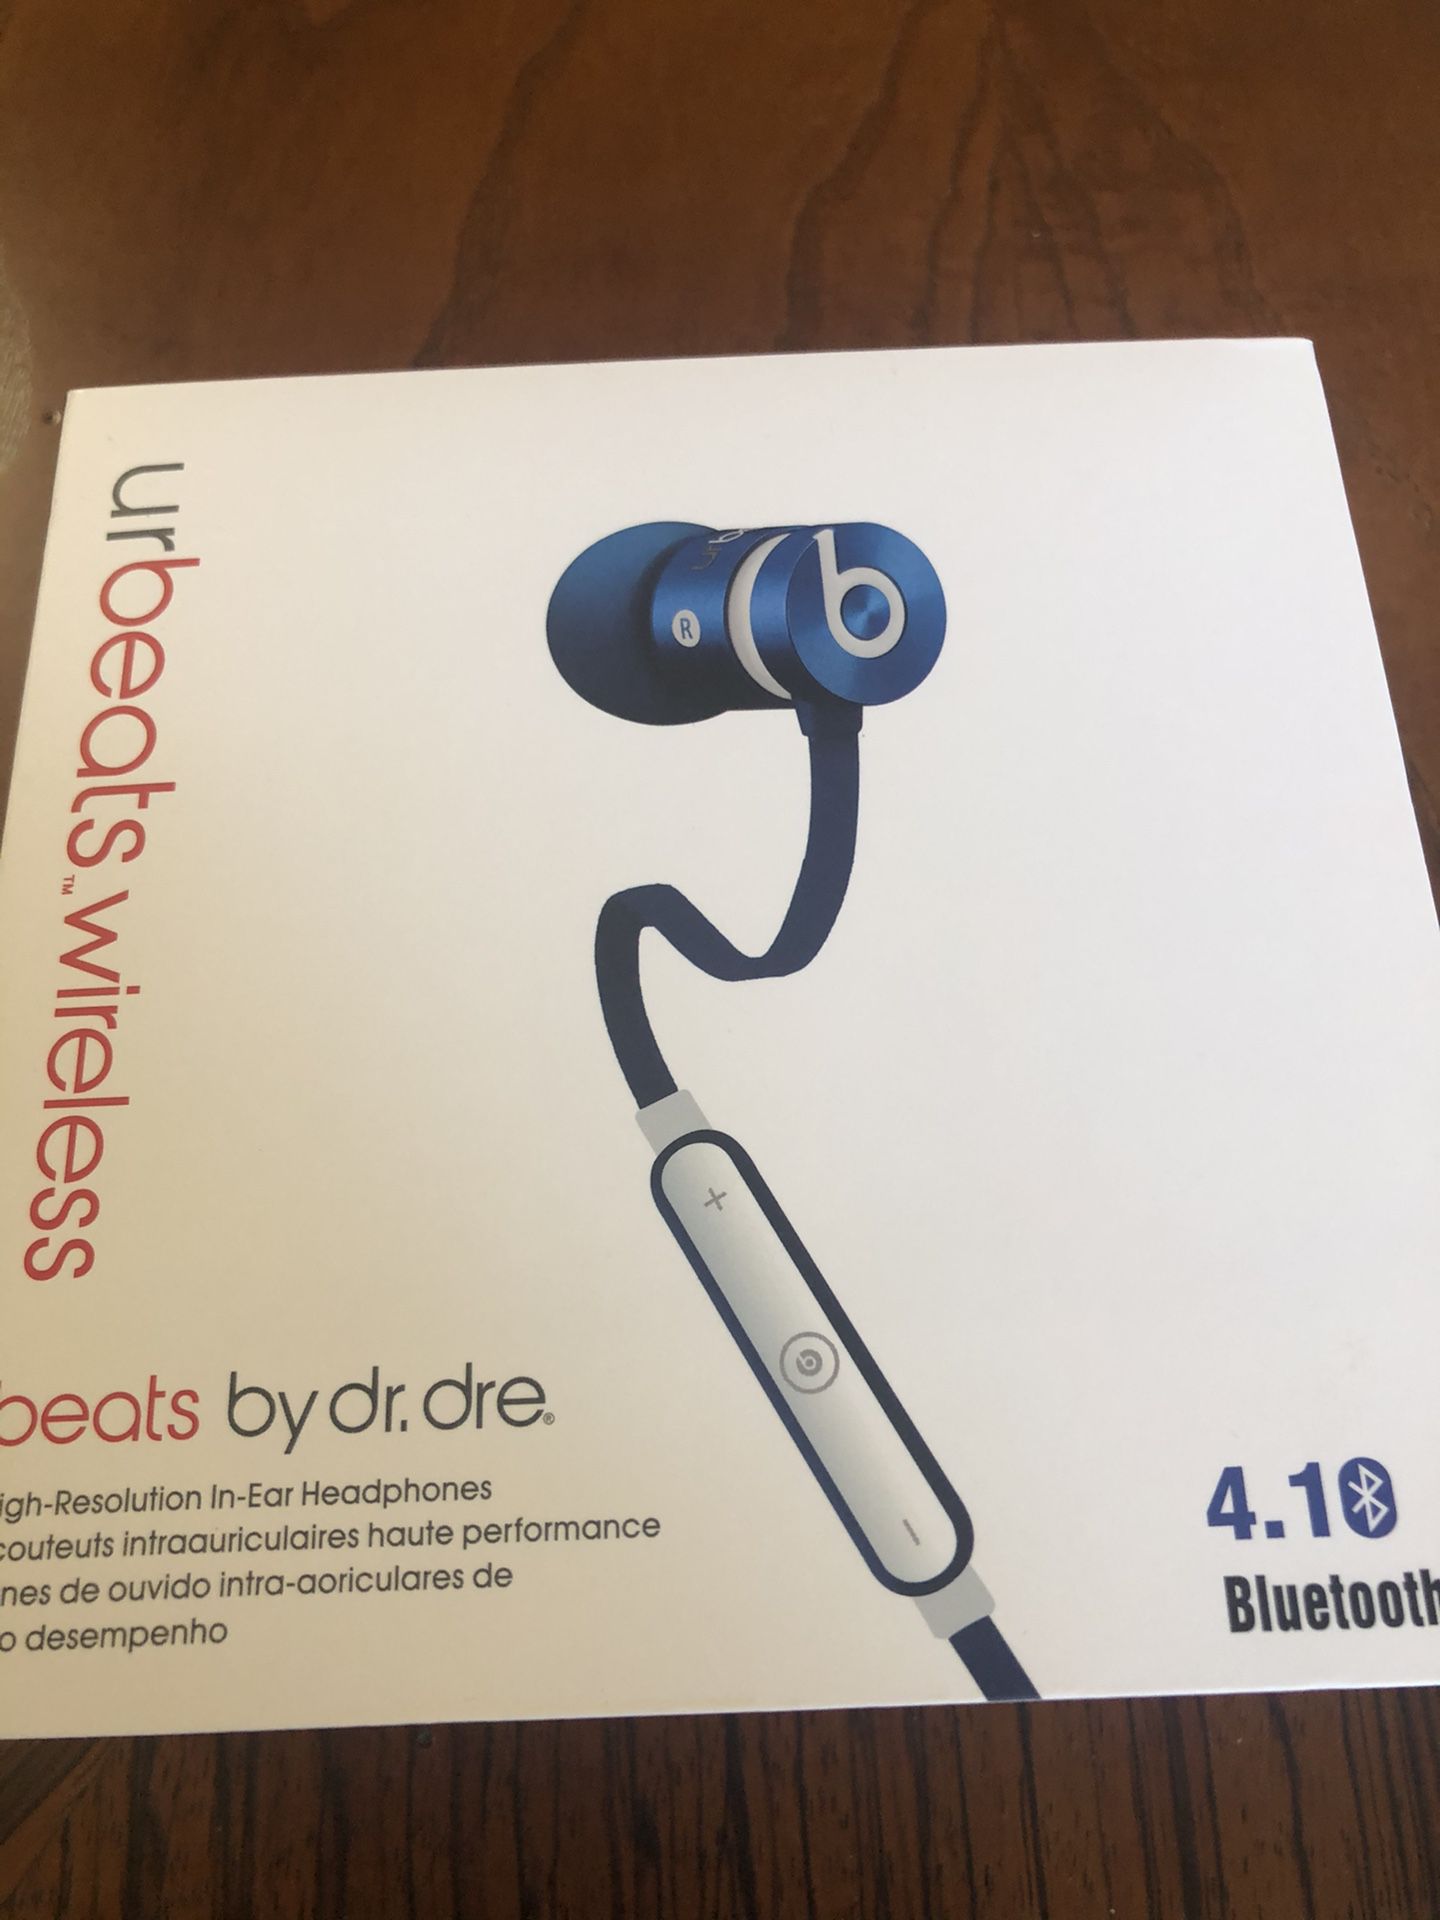 Beats by dr.dre - Urbeats wireless headphones